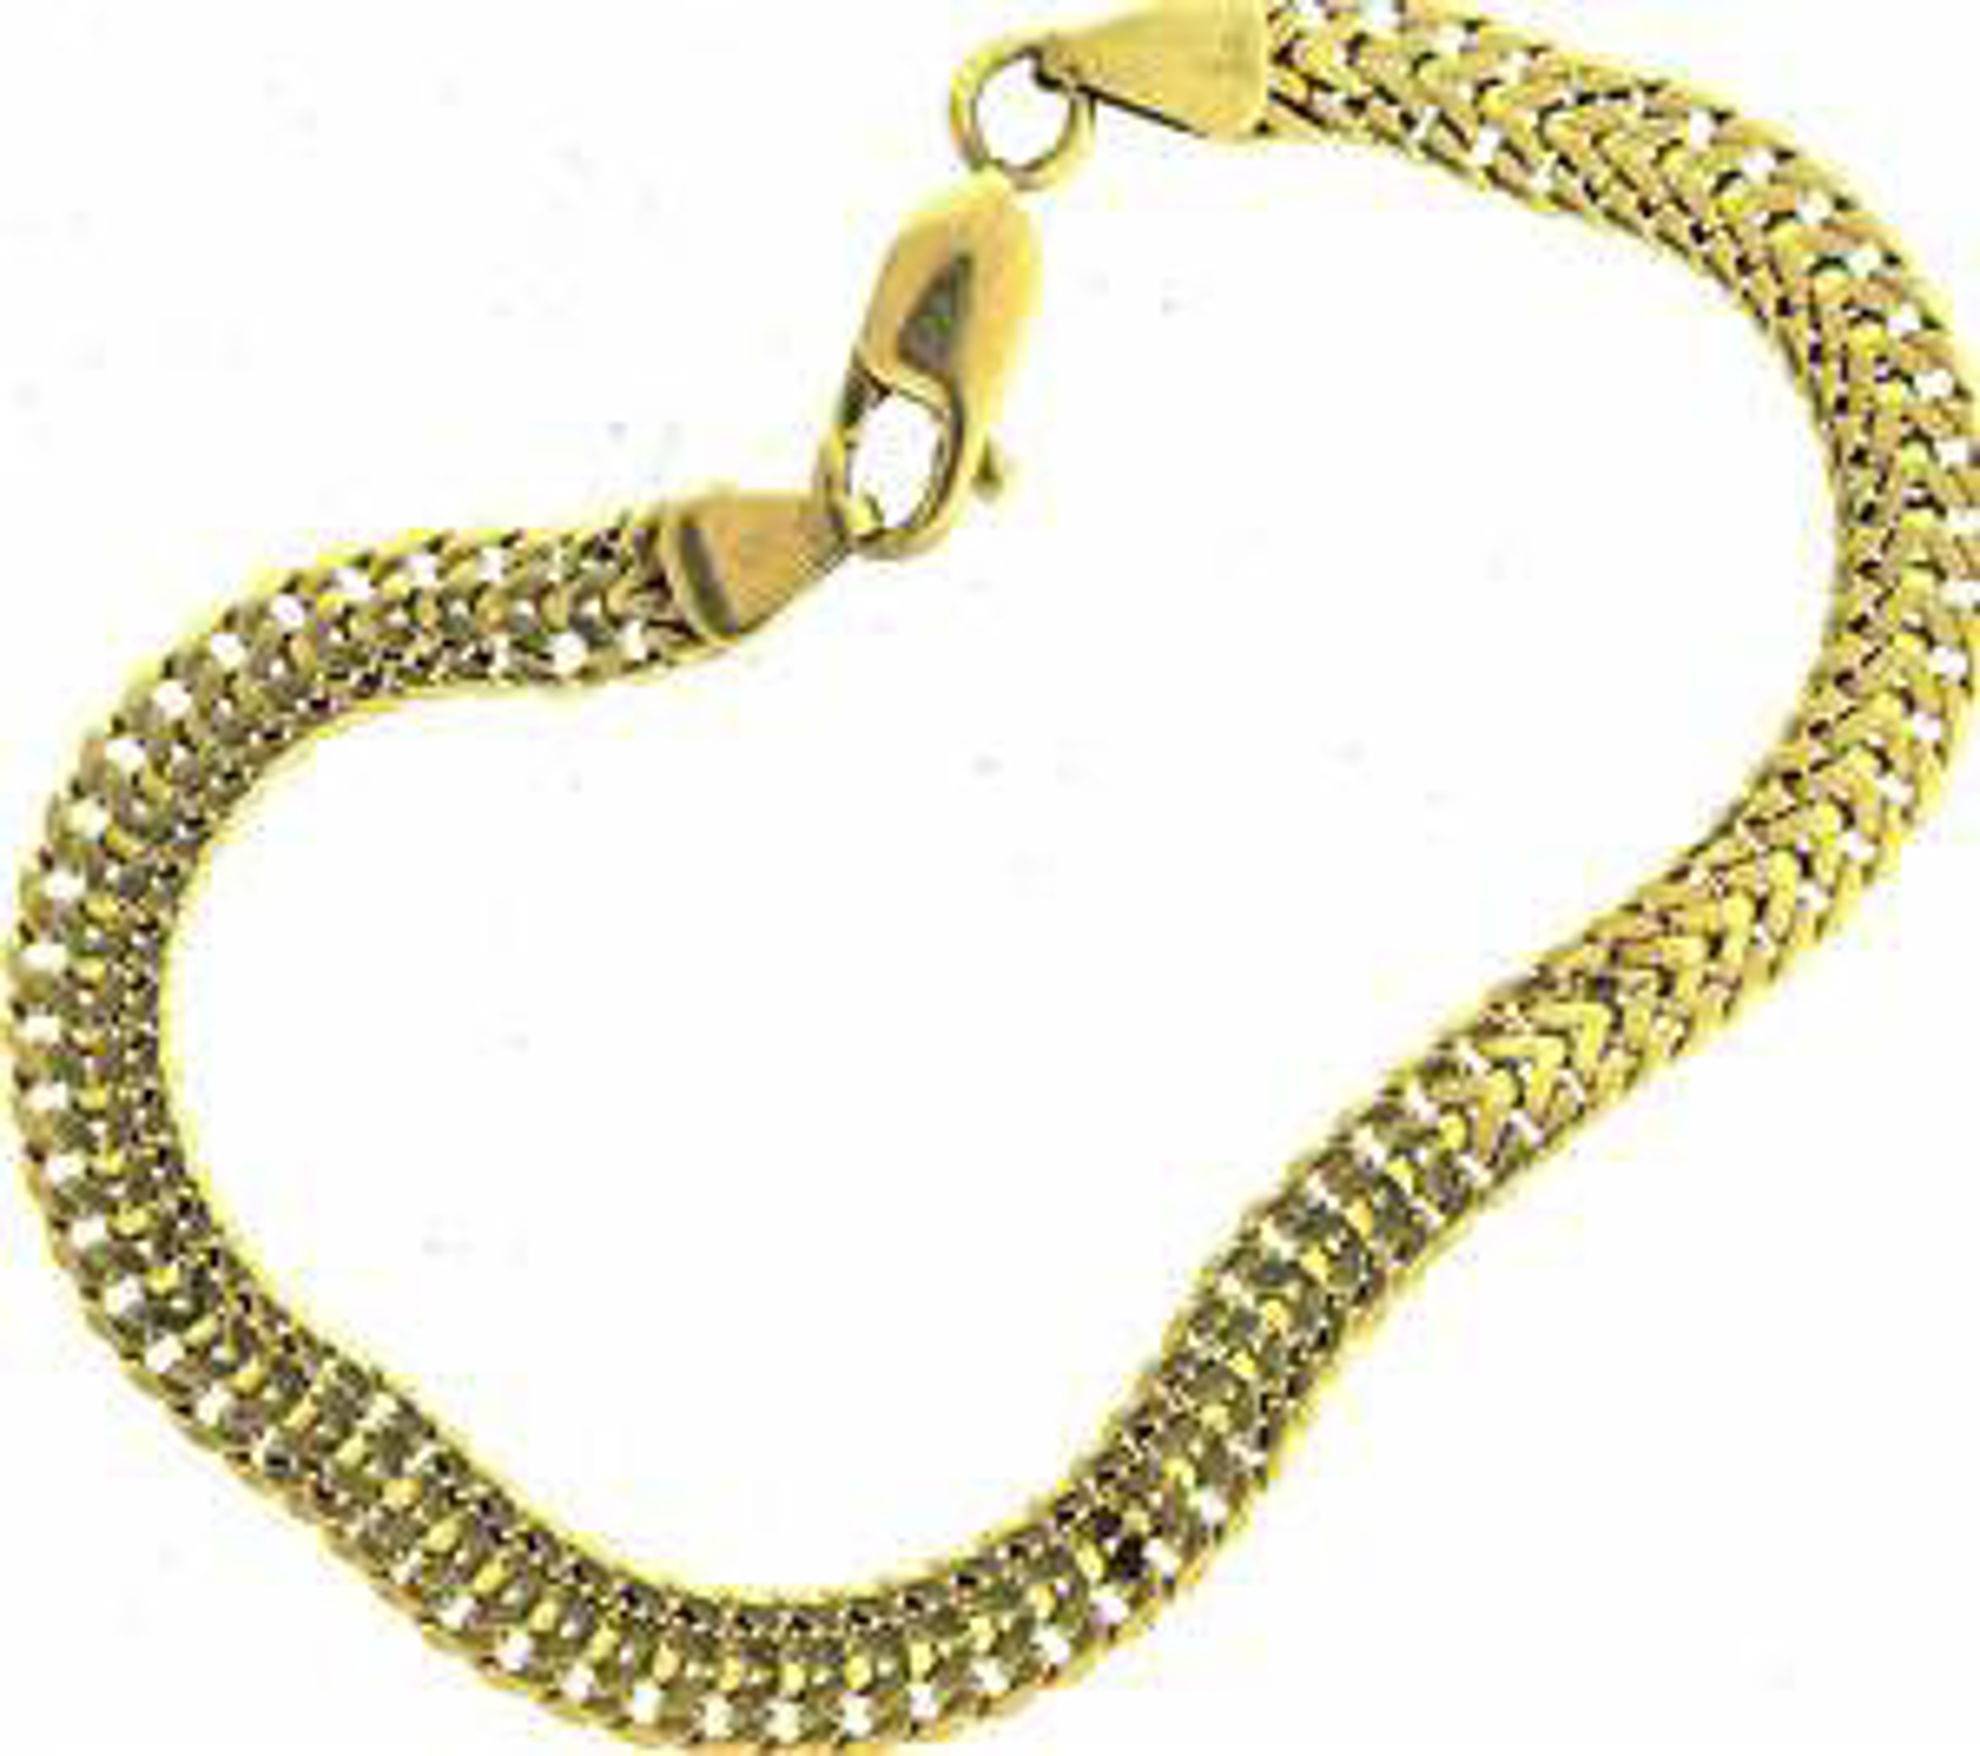 Picture of Bracelets 14kt-4.8 DWT, 7.5 Grams